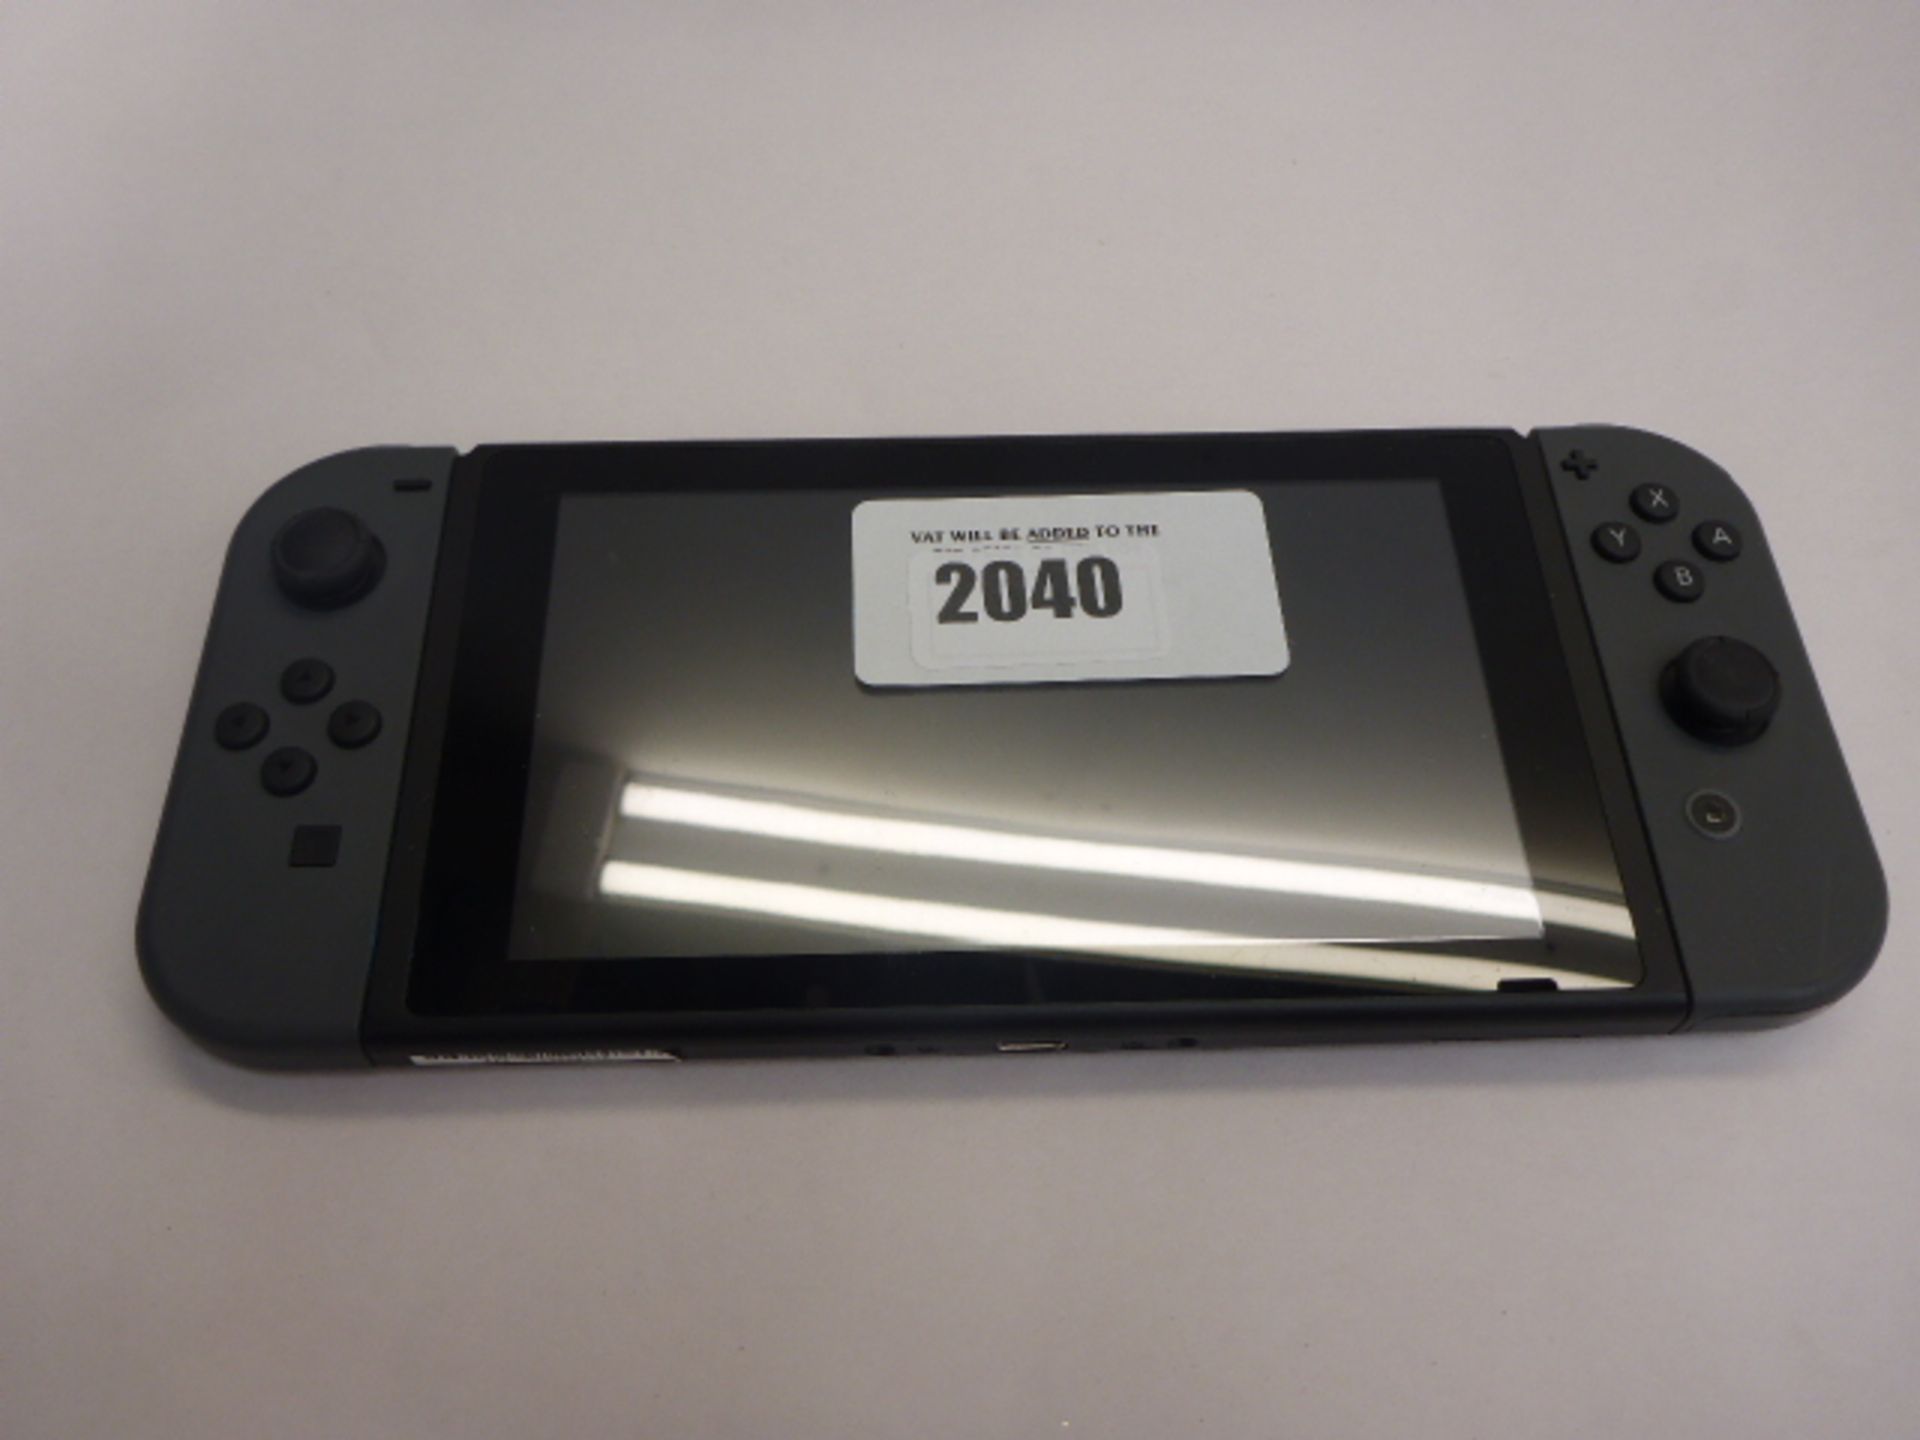 Nintendo Switch in black